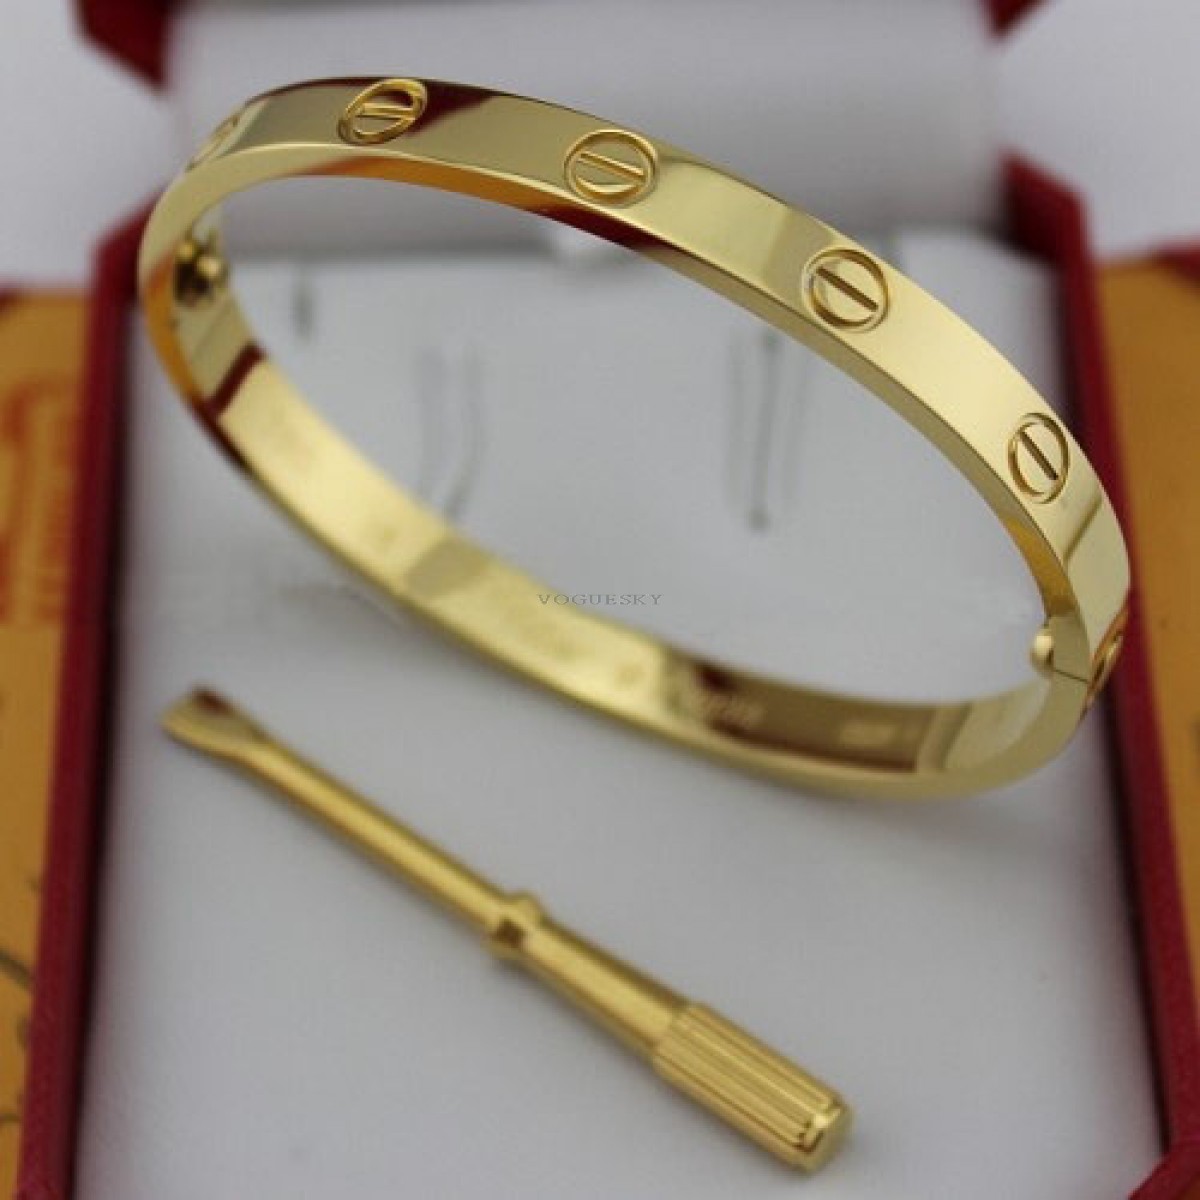 Cartier 18kt Yellow Gold Love Bangle For Men (Narrow) - Cartier Love  Bracelets - Cartier Jewelry